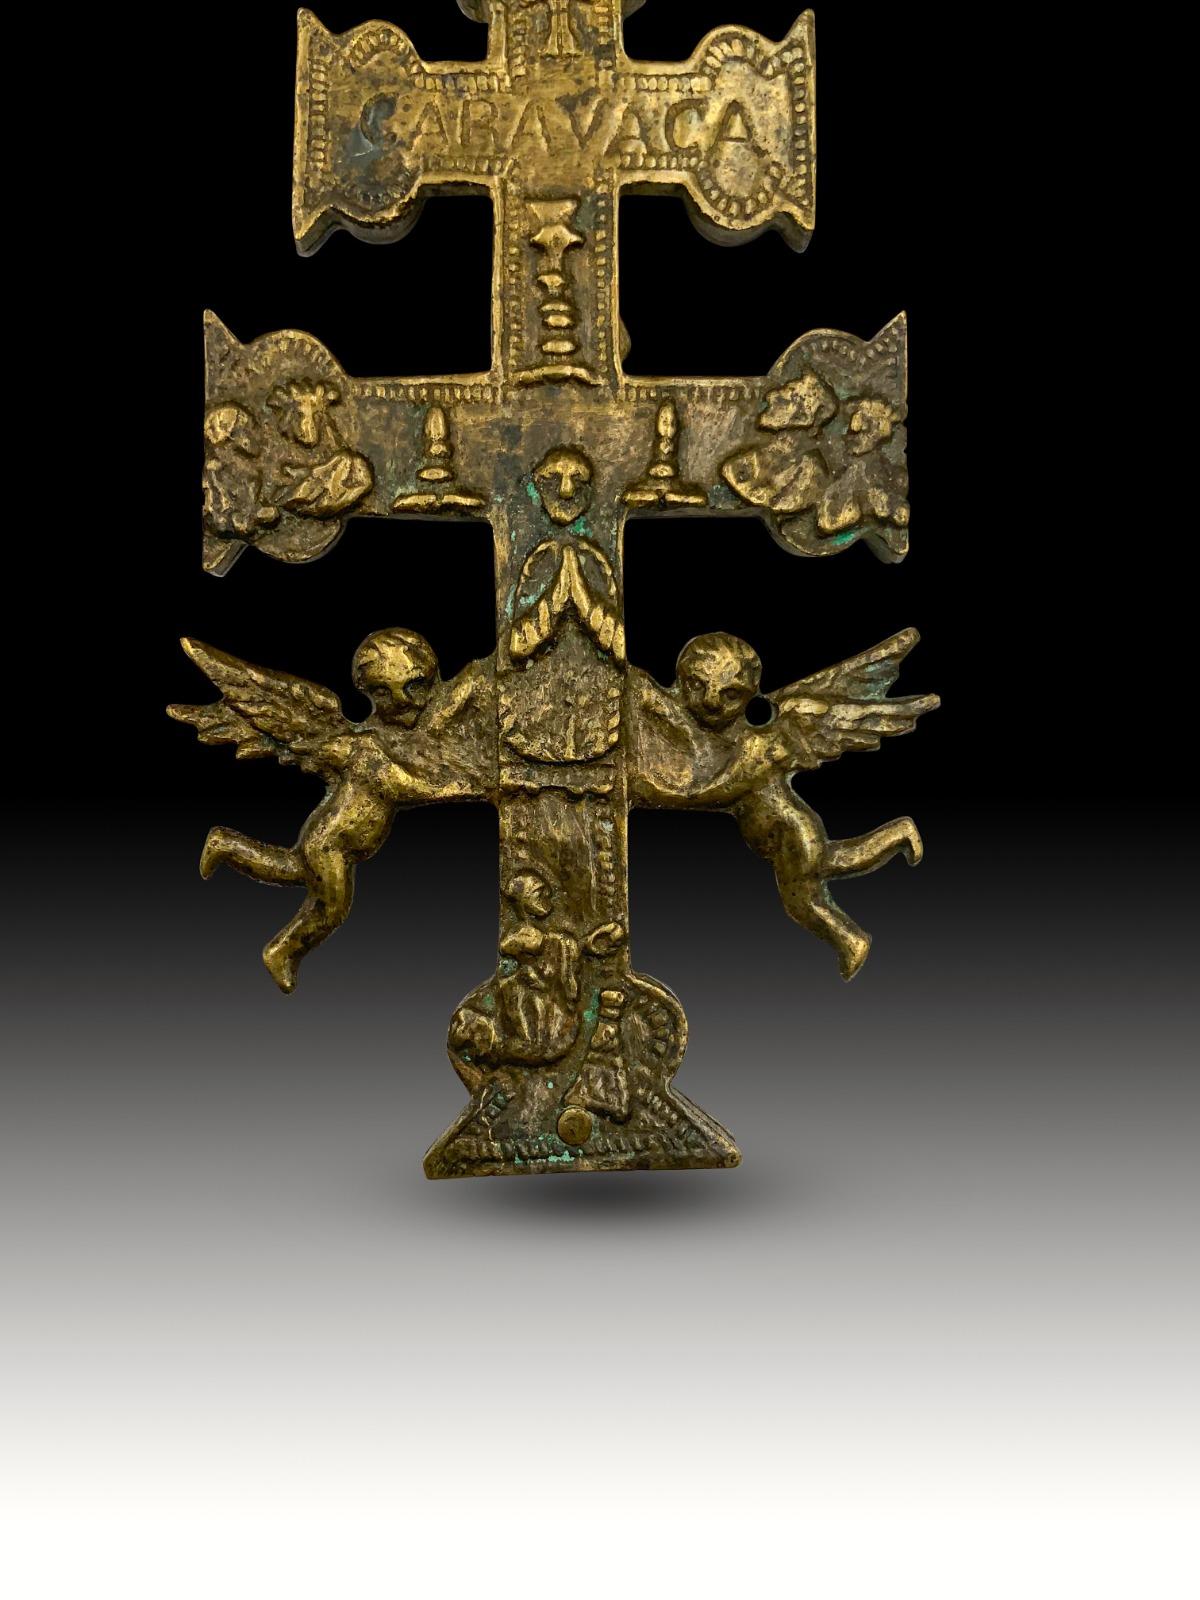 Cross of caravaca xvii century
Very beautiful cross of Caravaca made in bronze. 17th century. Measurements: 12 x 6cm
Good condition.